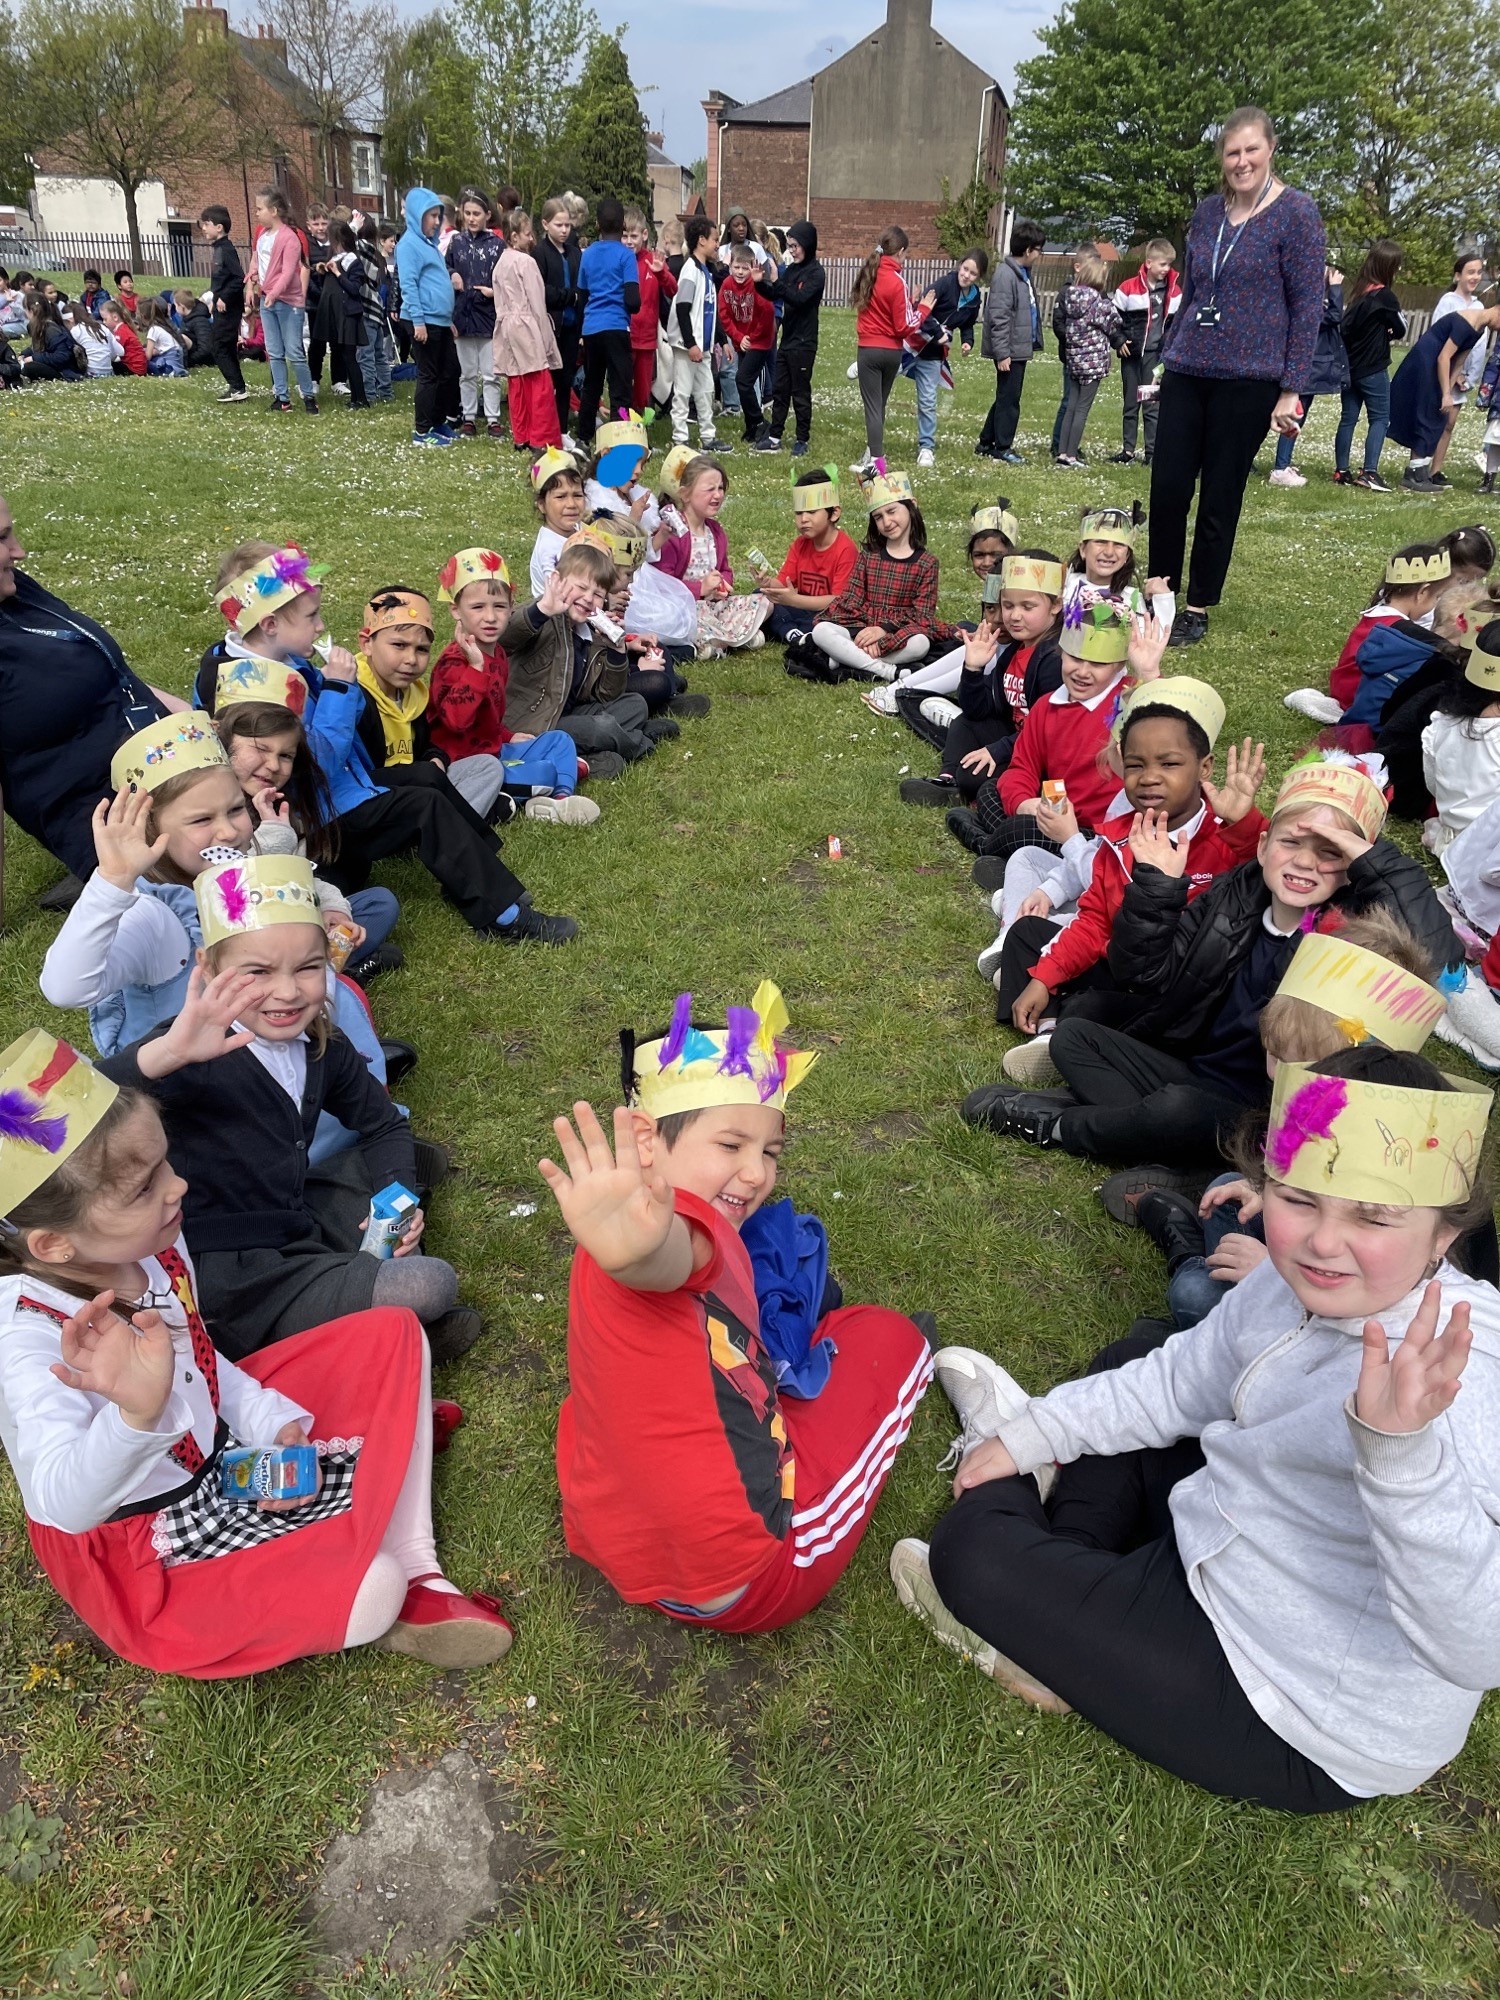  Coronation celebrations at St Giles School, Wrexham.